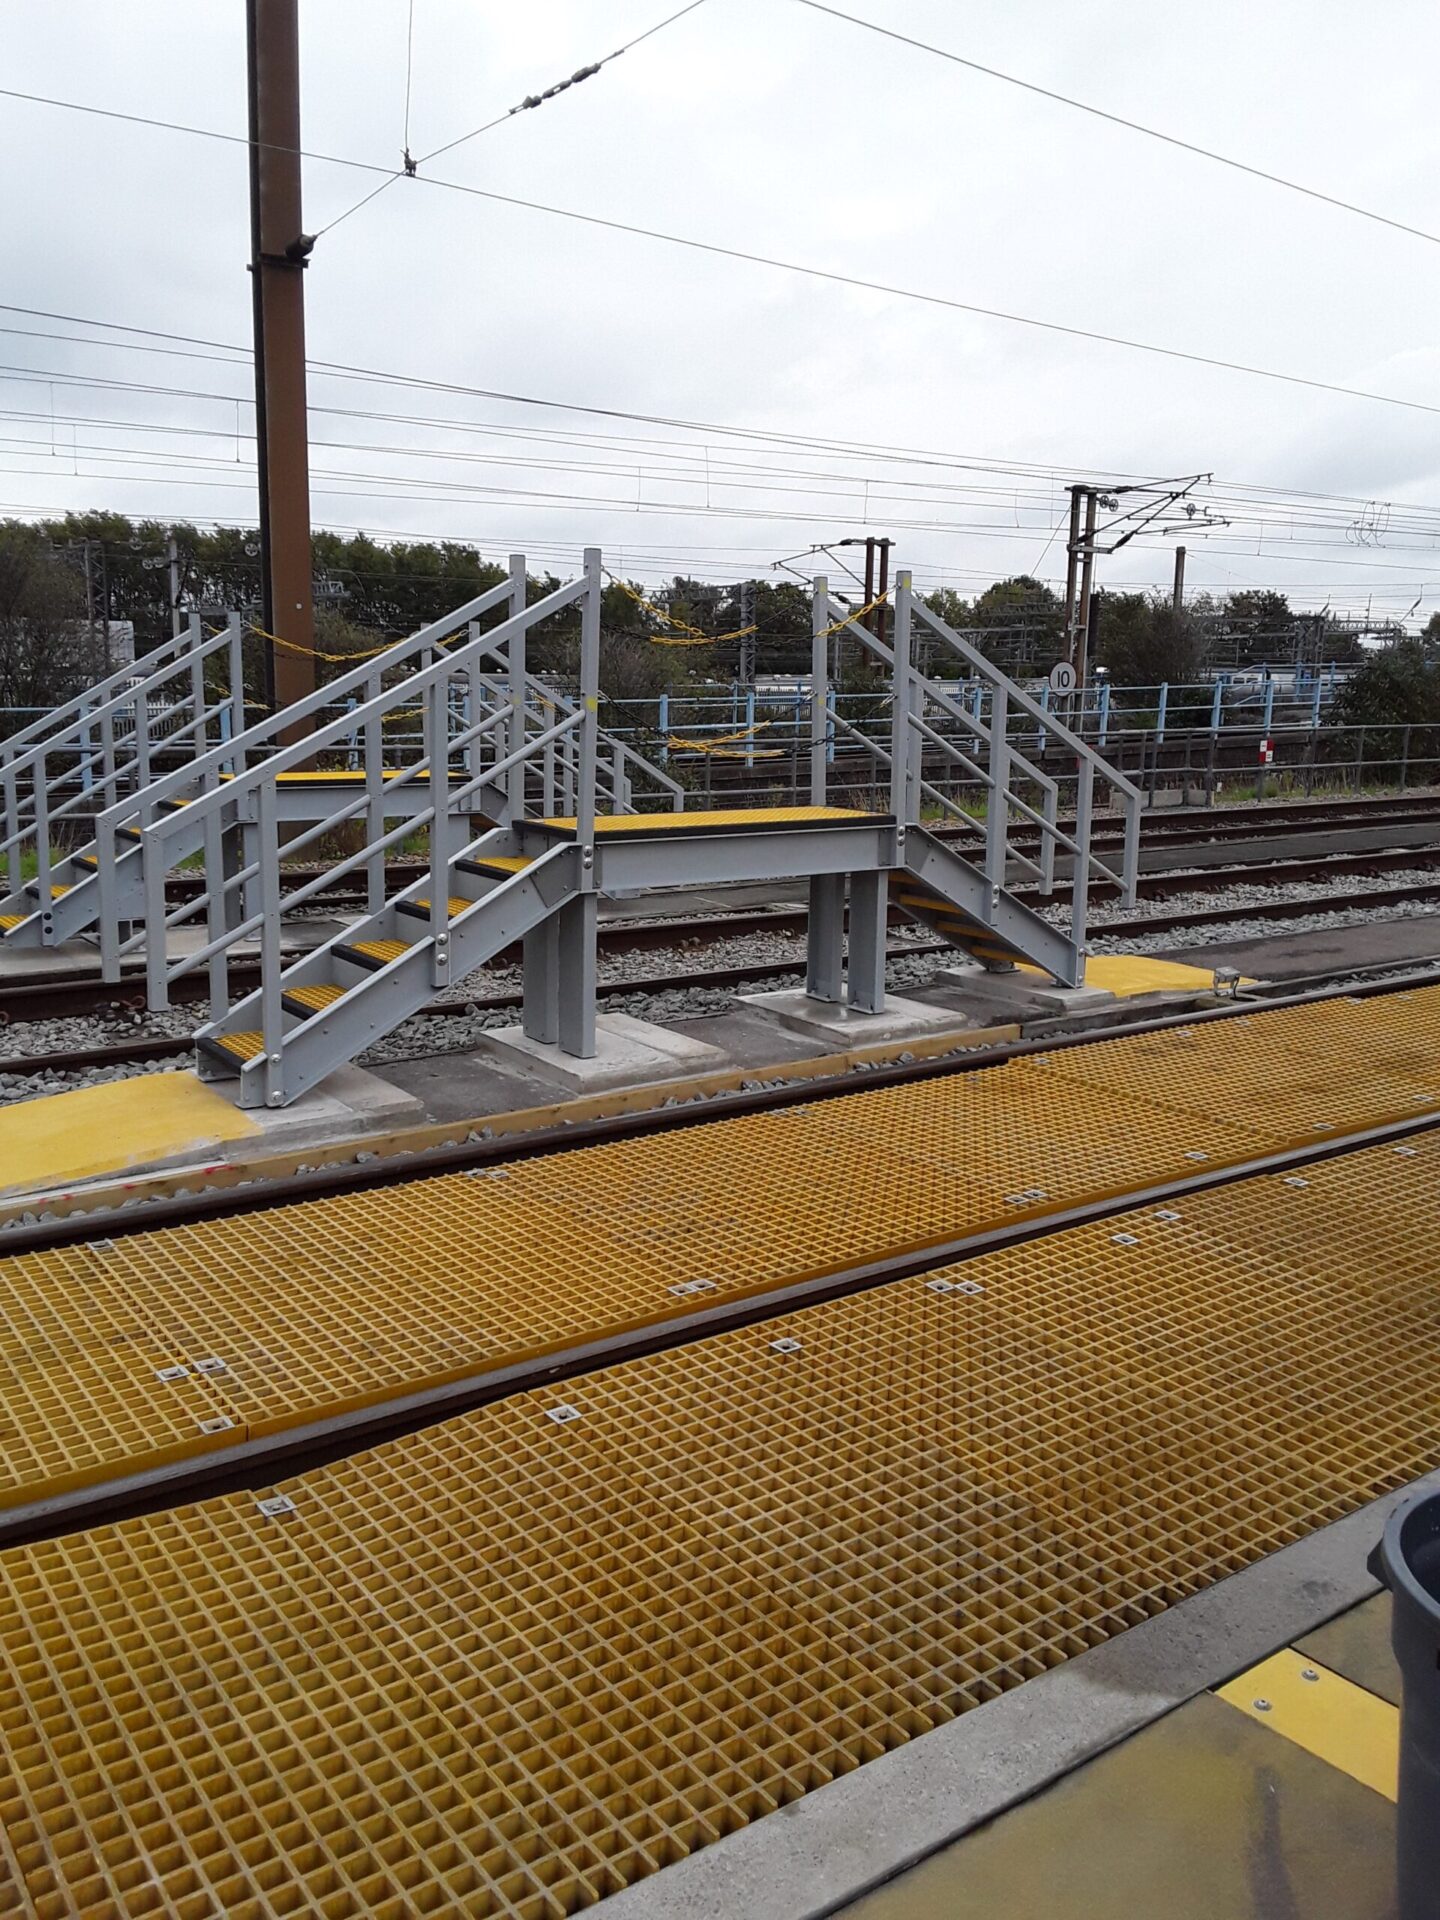 Drivers GRP access platforms at Ferme Park railway depot